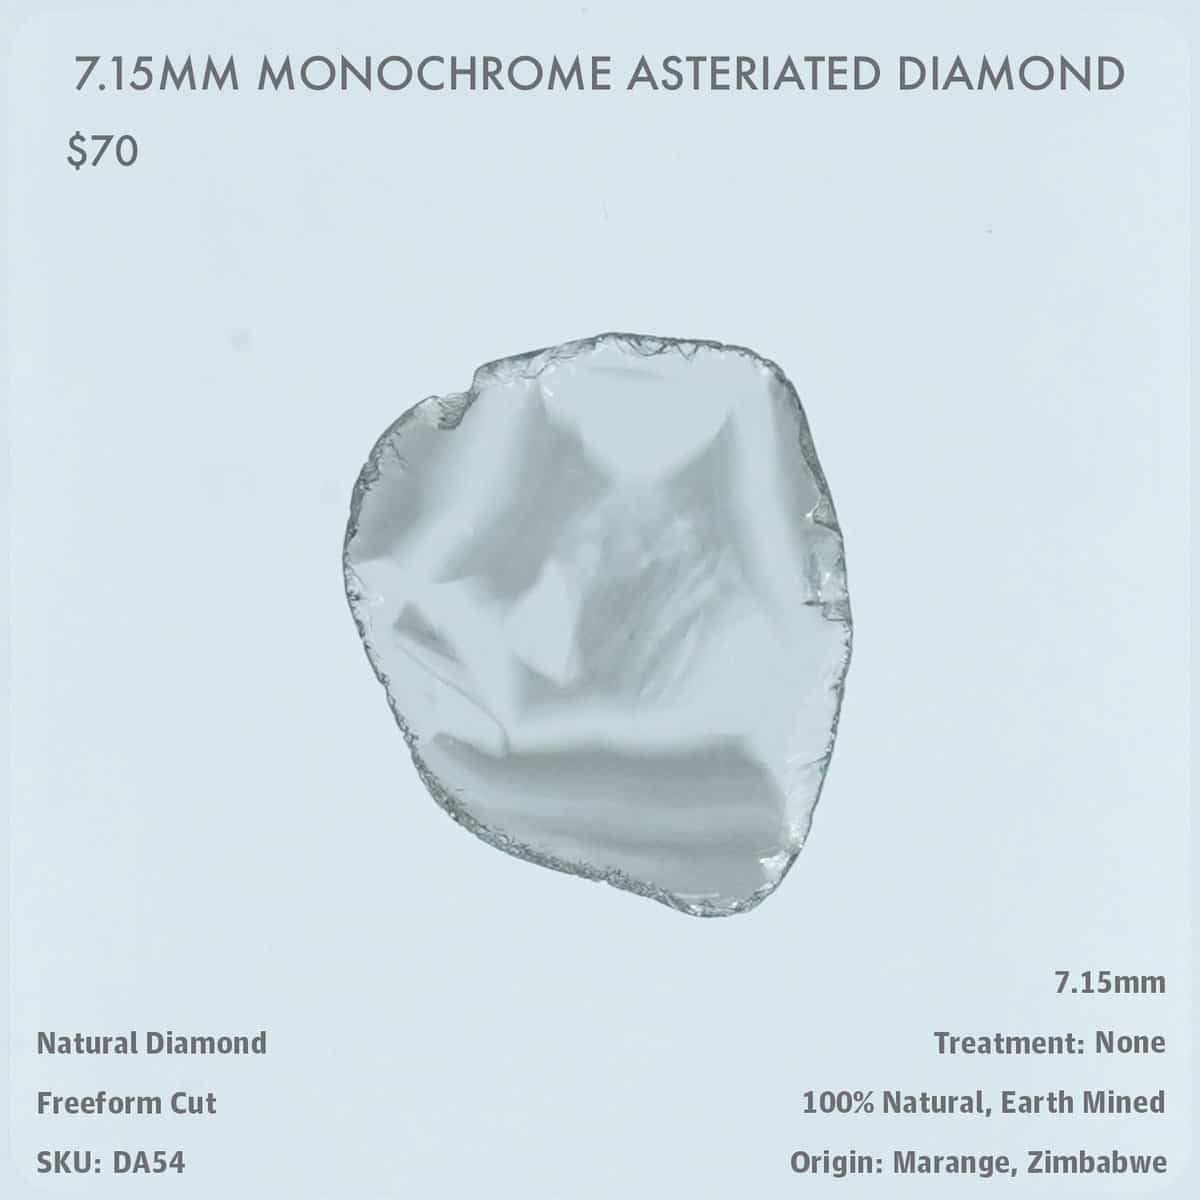 7.15mm Monochrome Asteriated Diamond